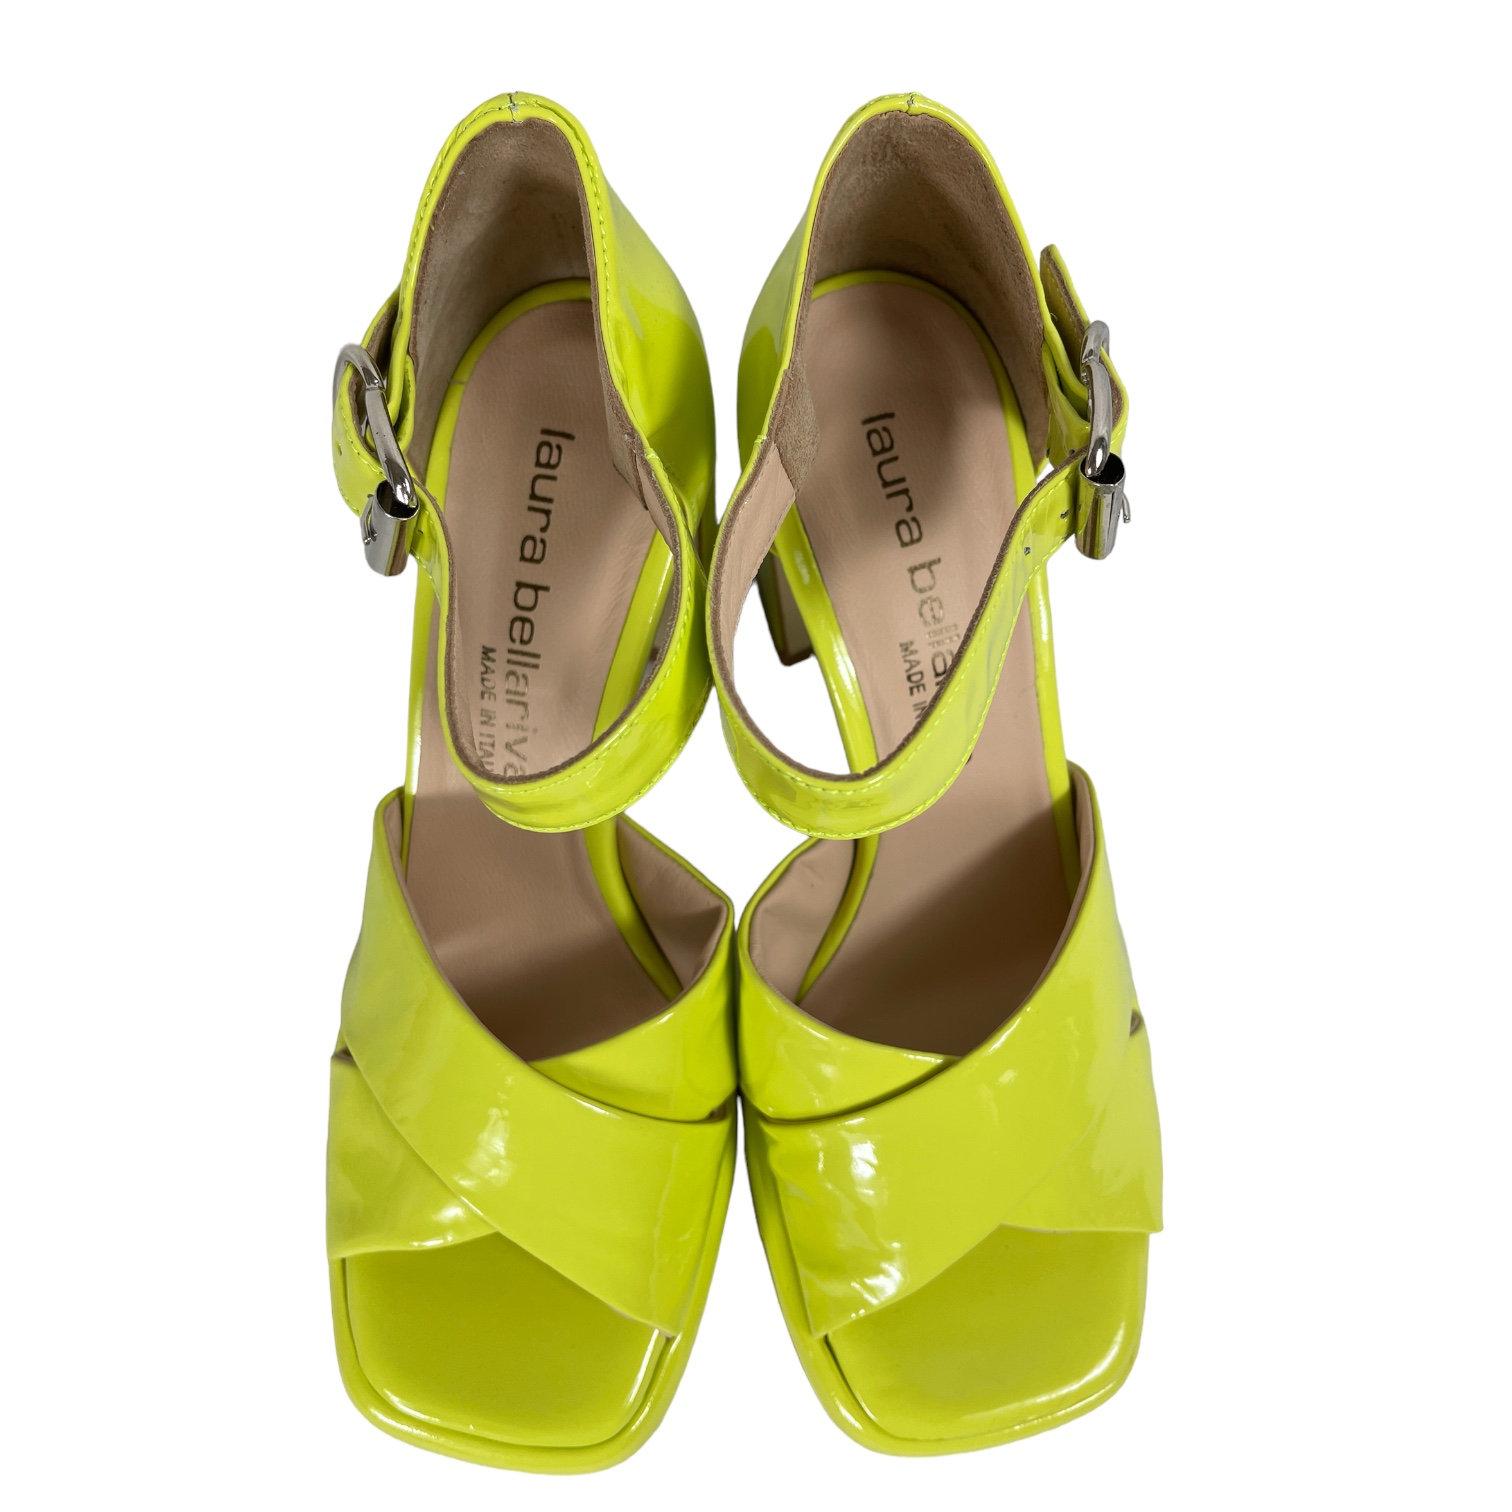 Laura Bellariva 9490-11 NAPLAK Damen Sandalette Lackleder Gelb Lime